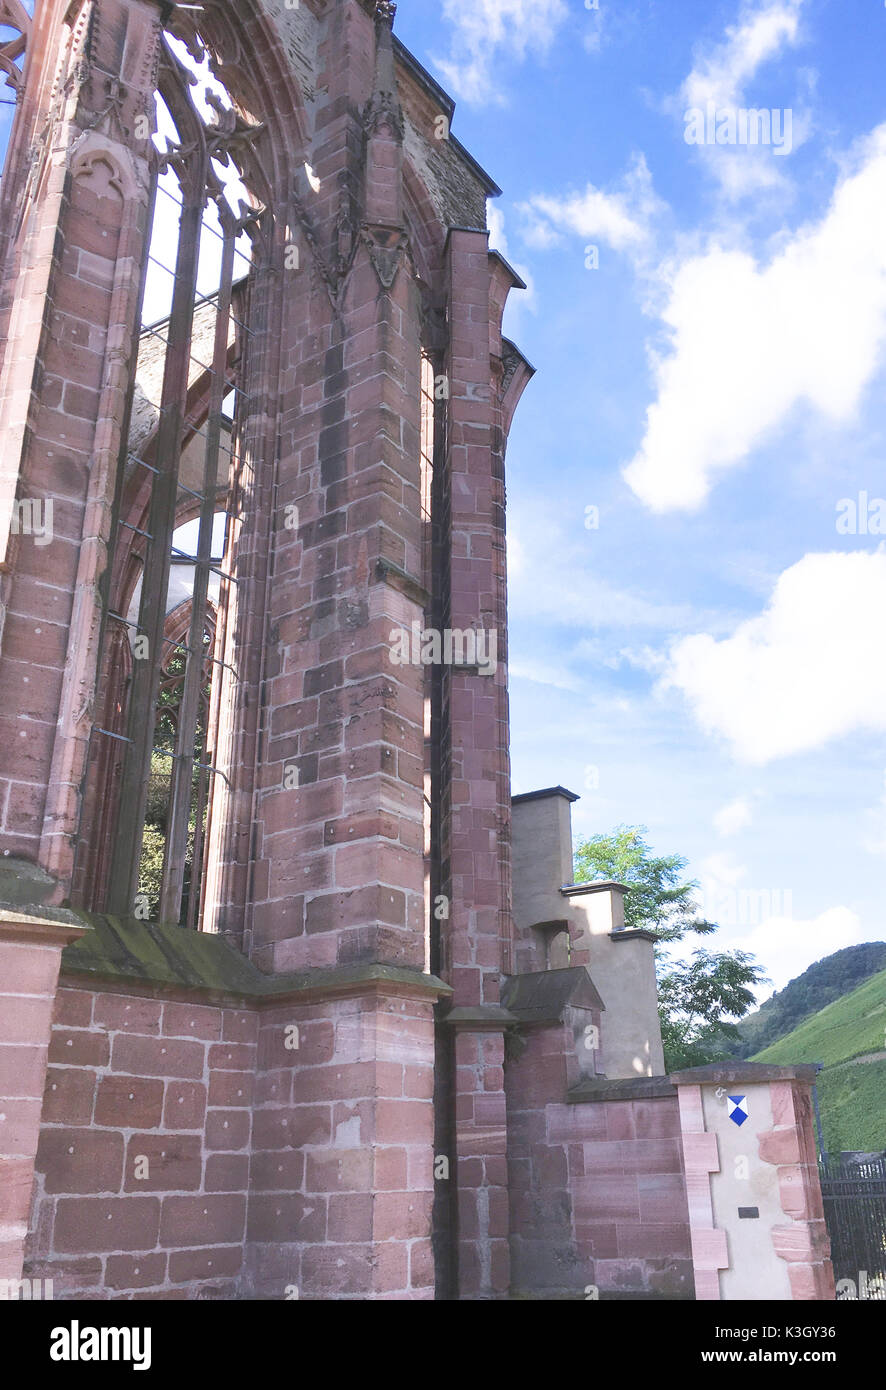 Bacharach on Rhine, Germany, Chapel ruin Stock Photo